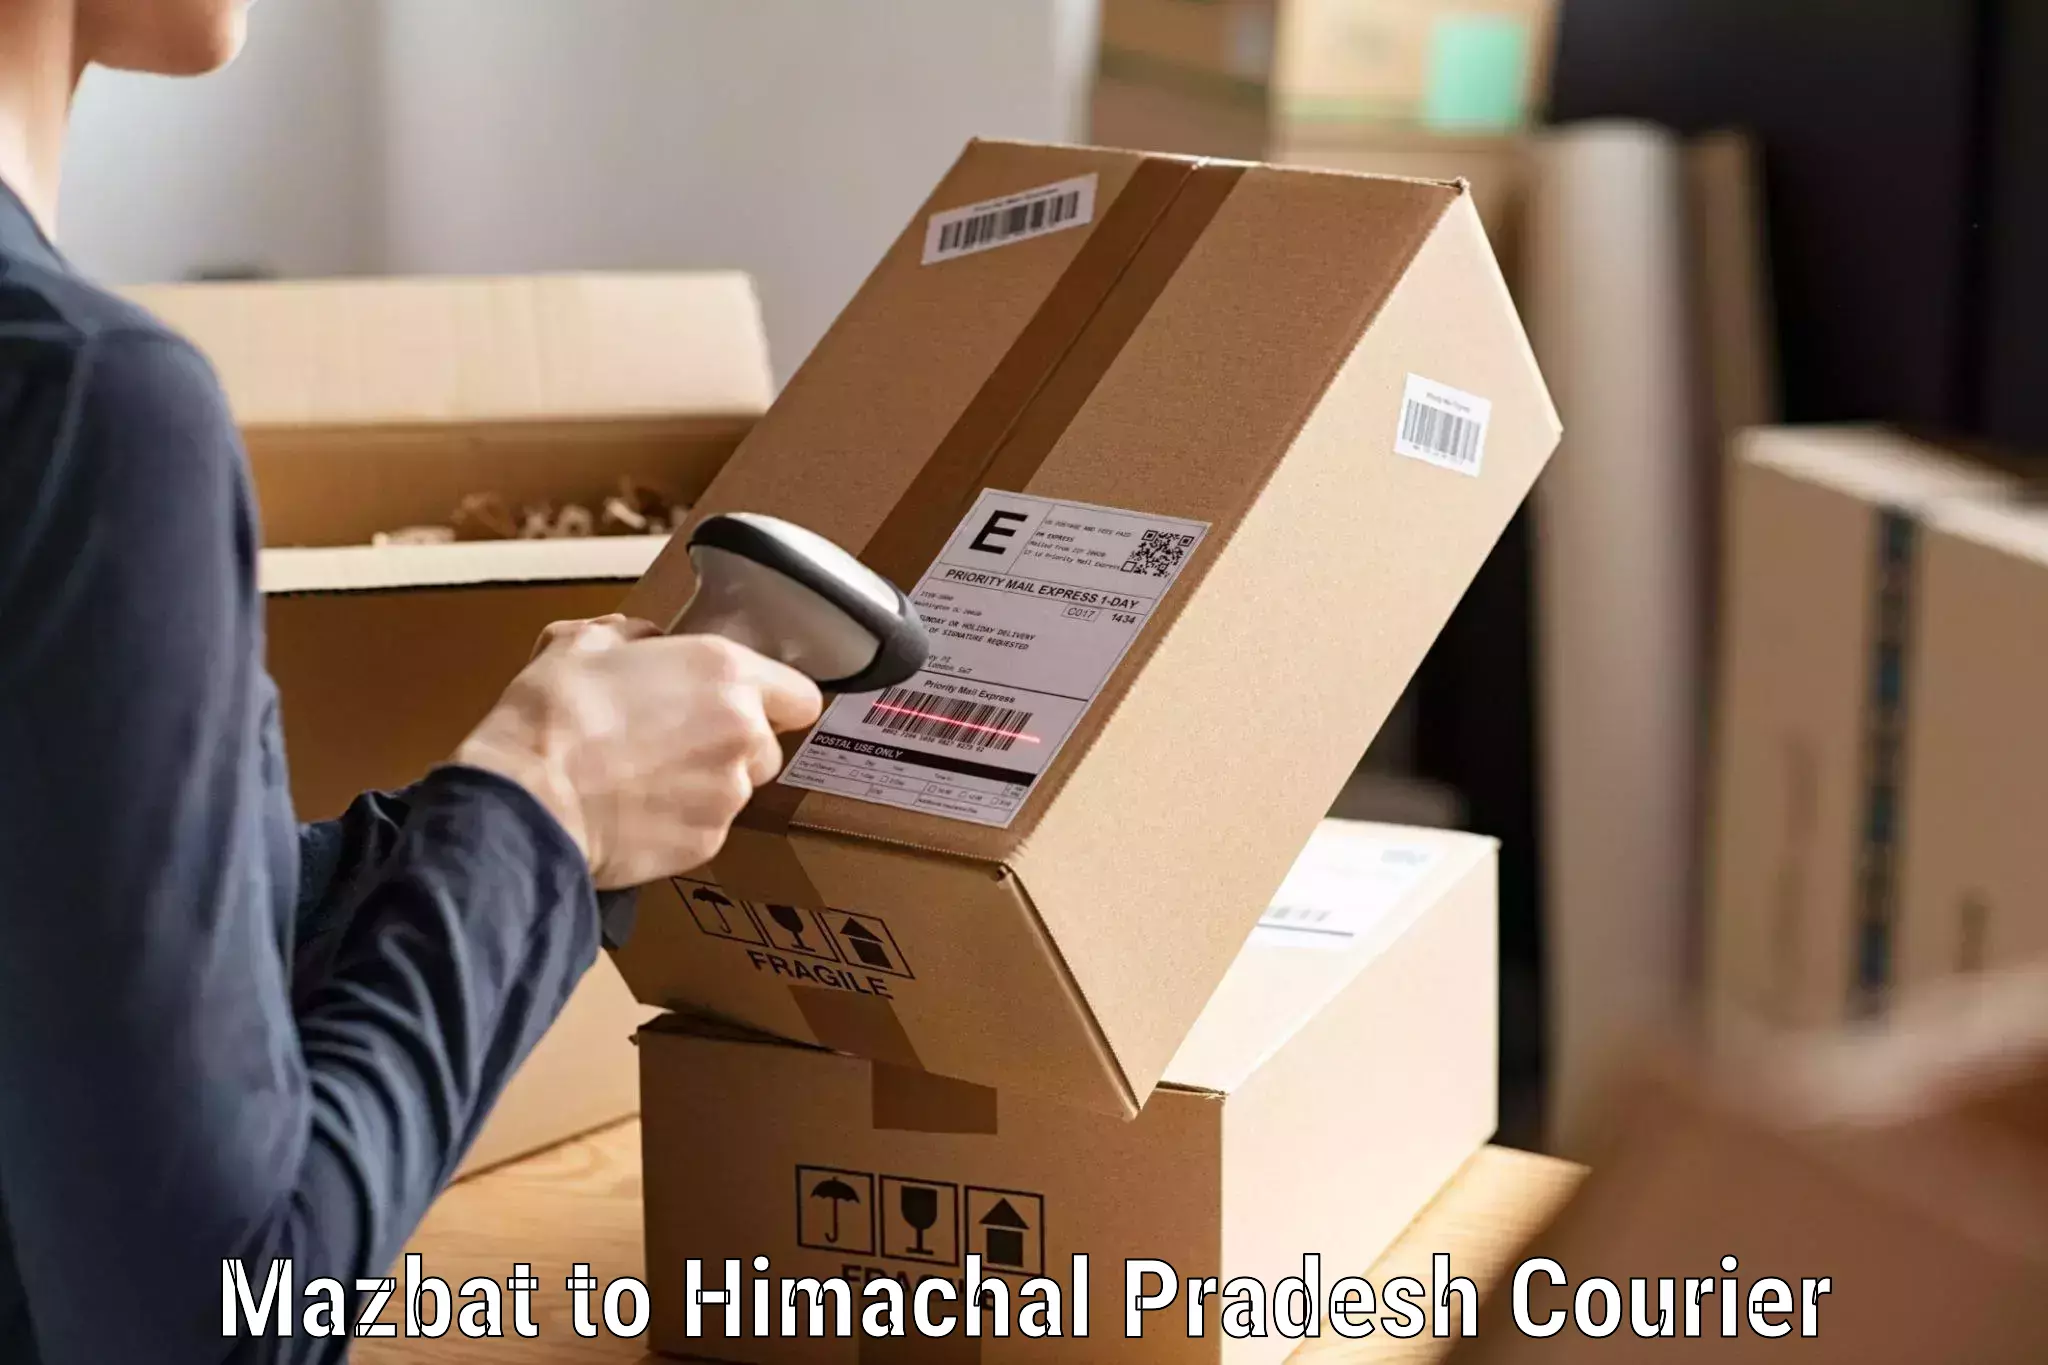 Pharmaceutical courier Mazbat to Himachal Pradesh